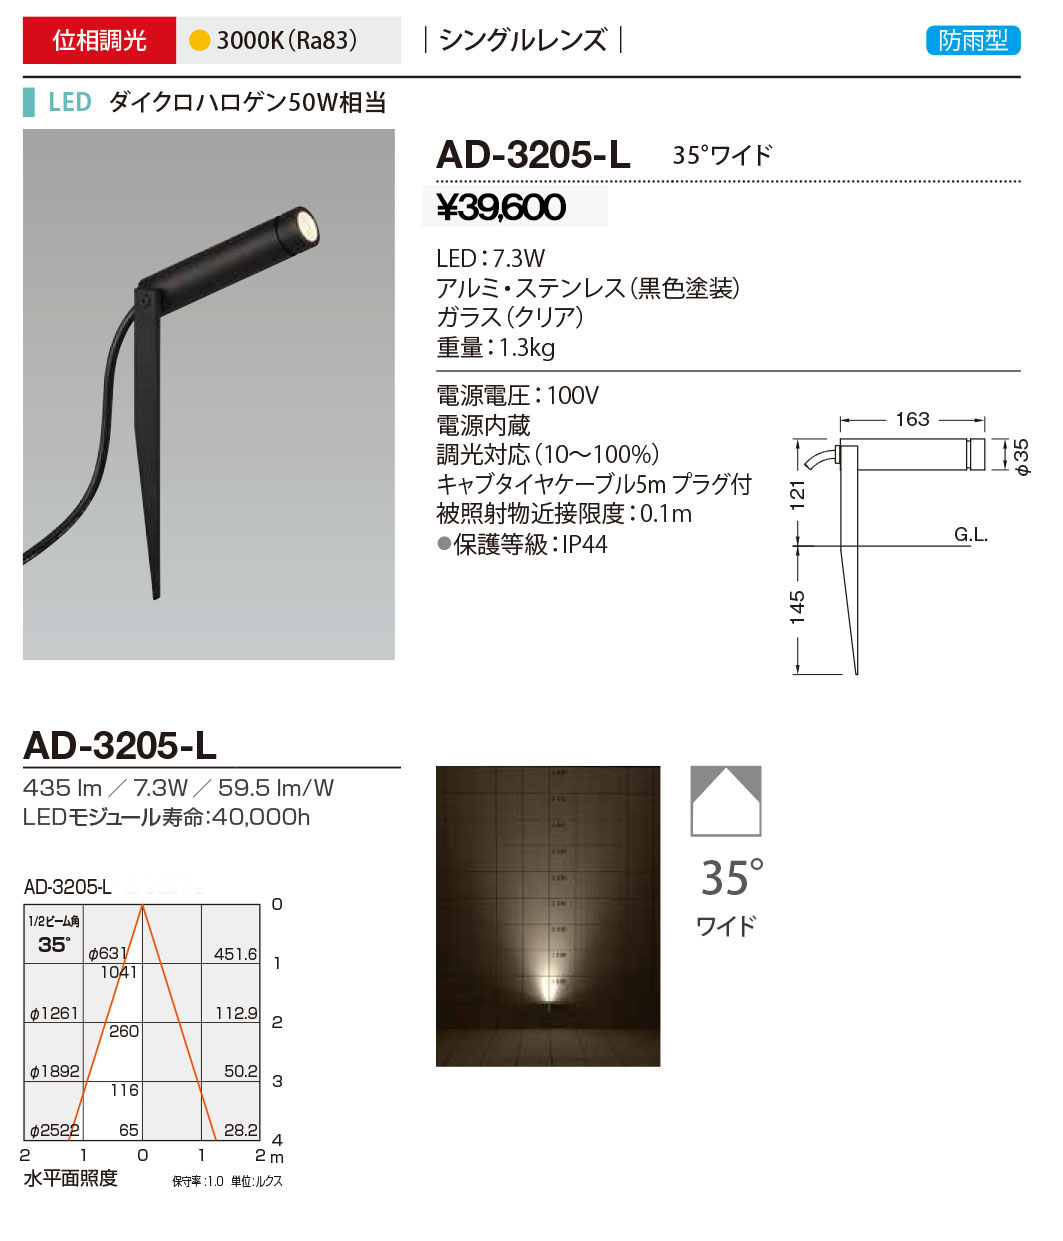 AD-3212-L 山田照明 屋外スポットライト 黒色 LED 電球色 調光 35度 - 1